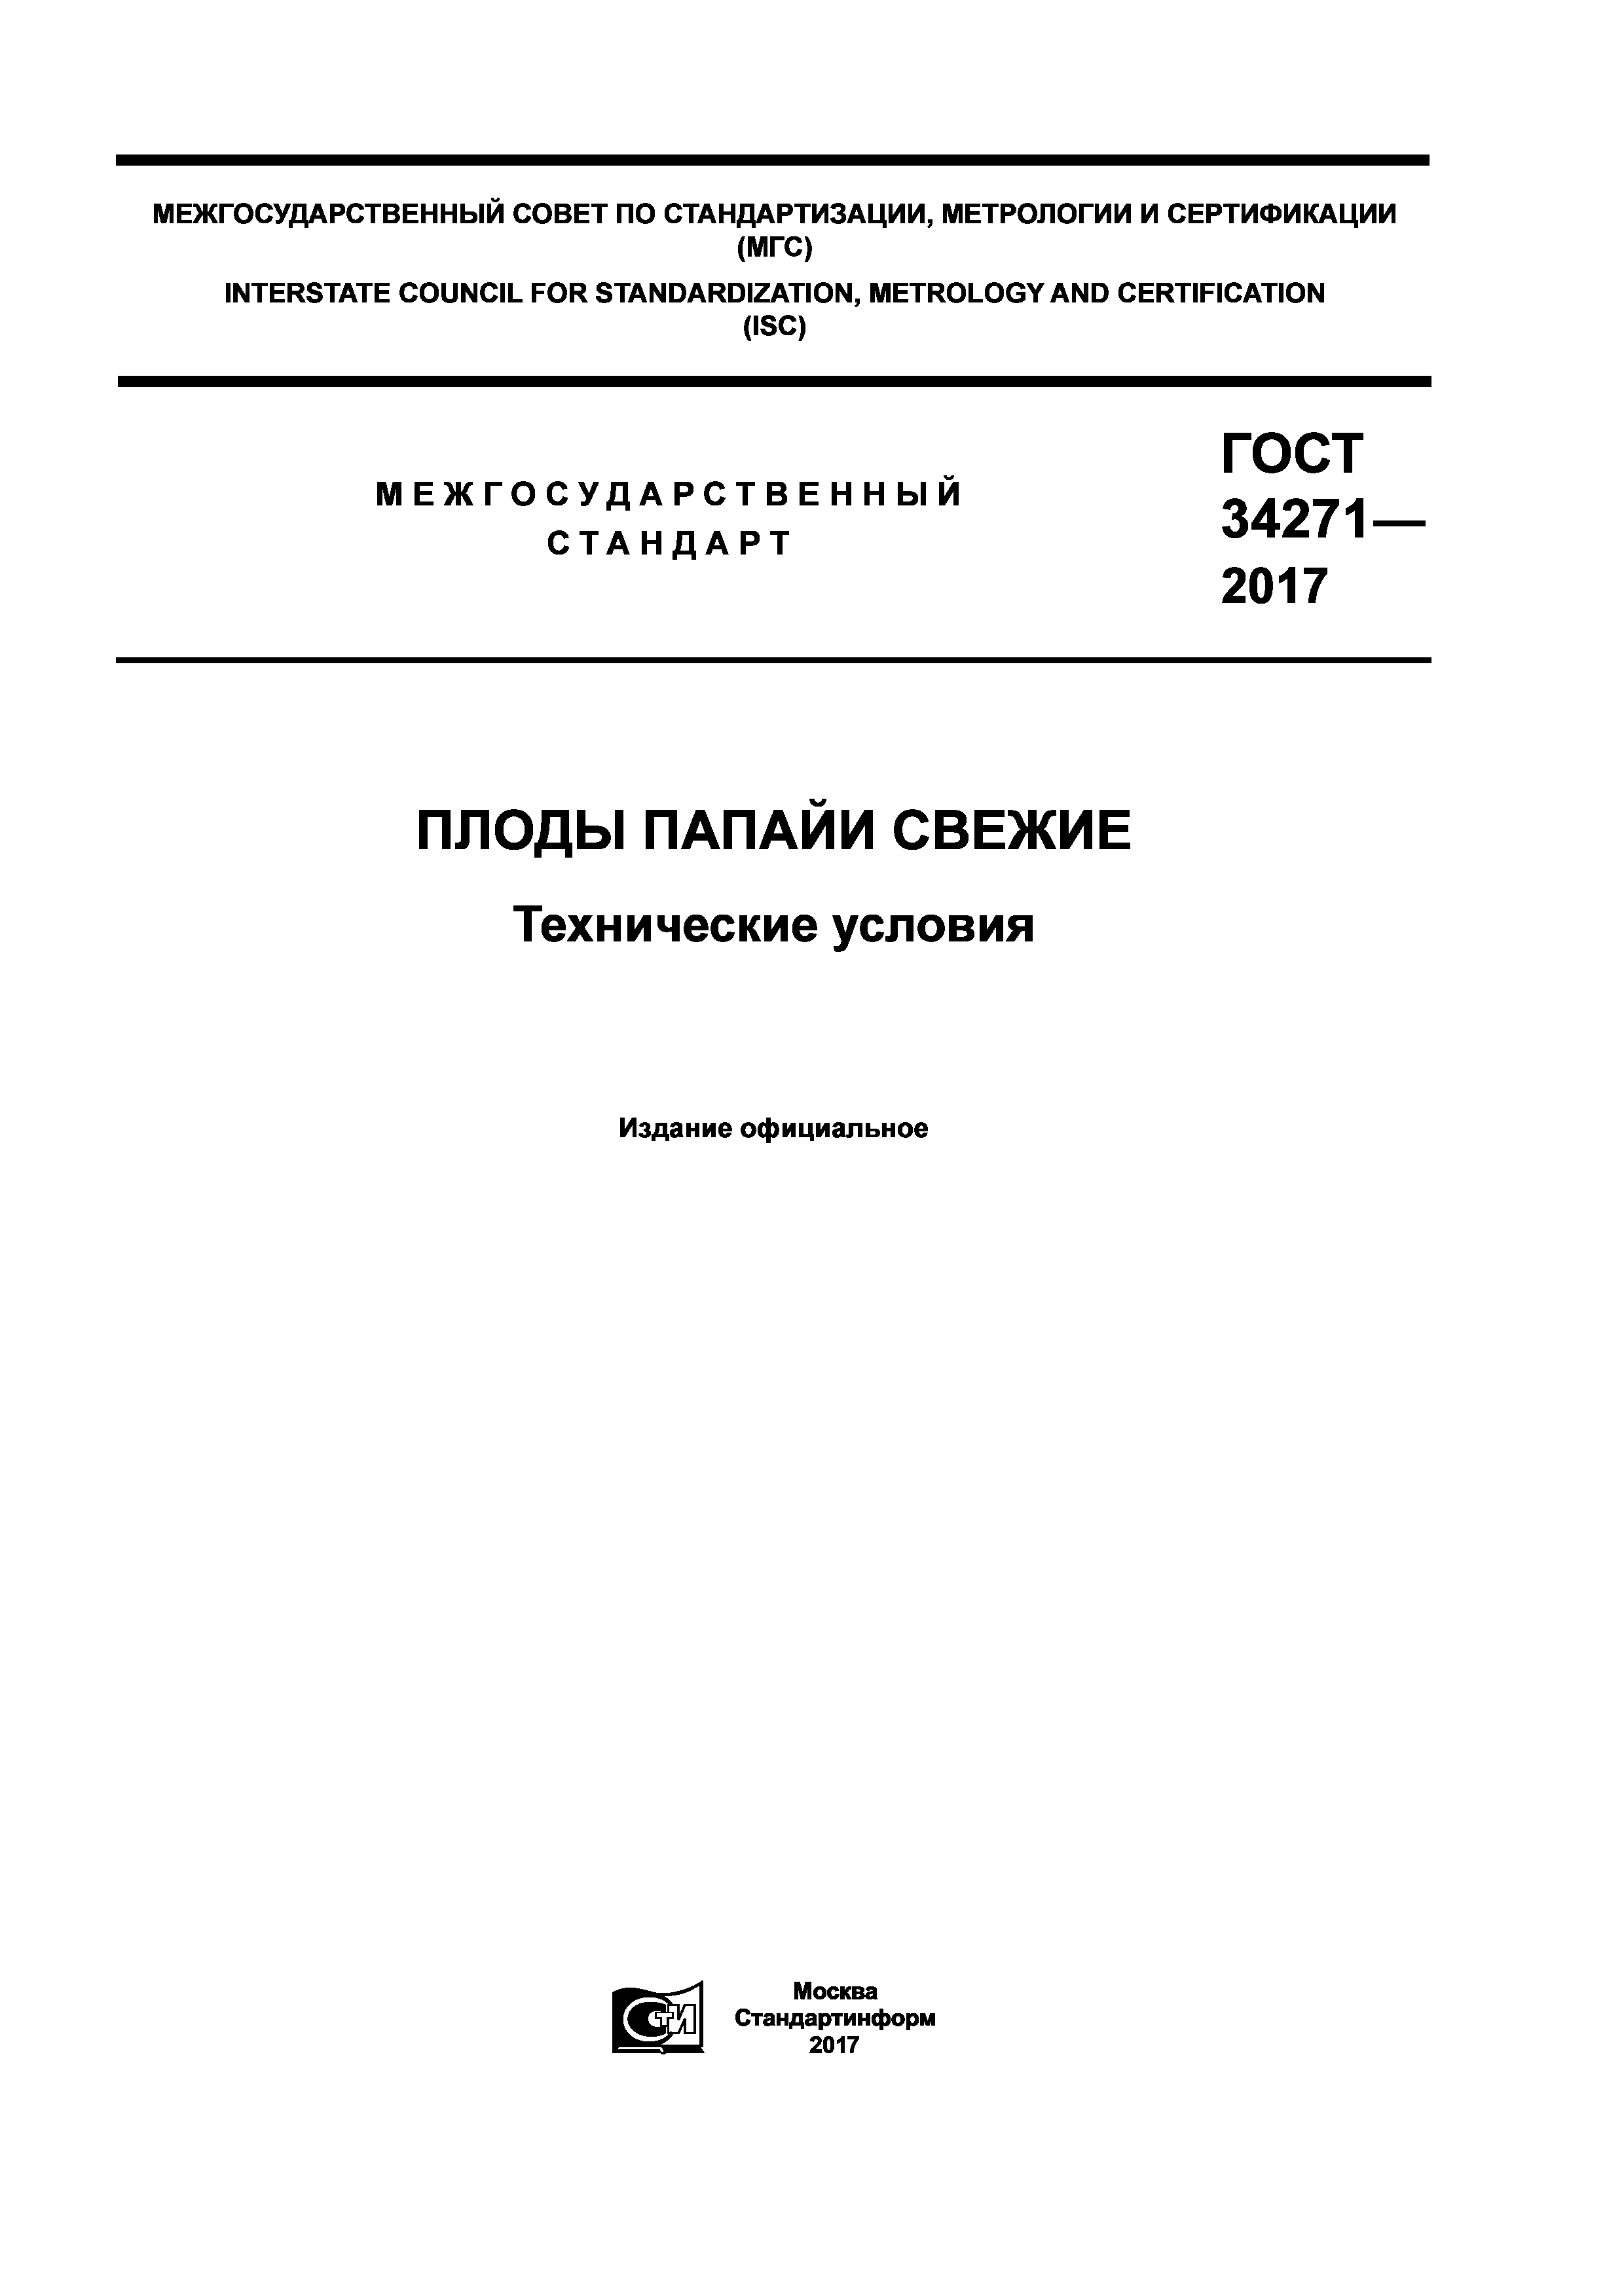 ГОСТ 34271-2017